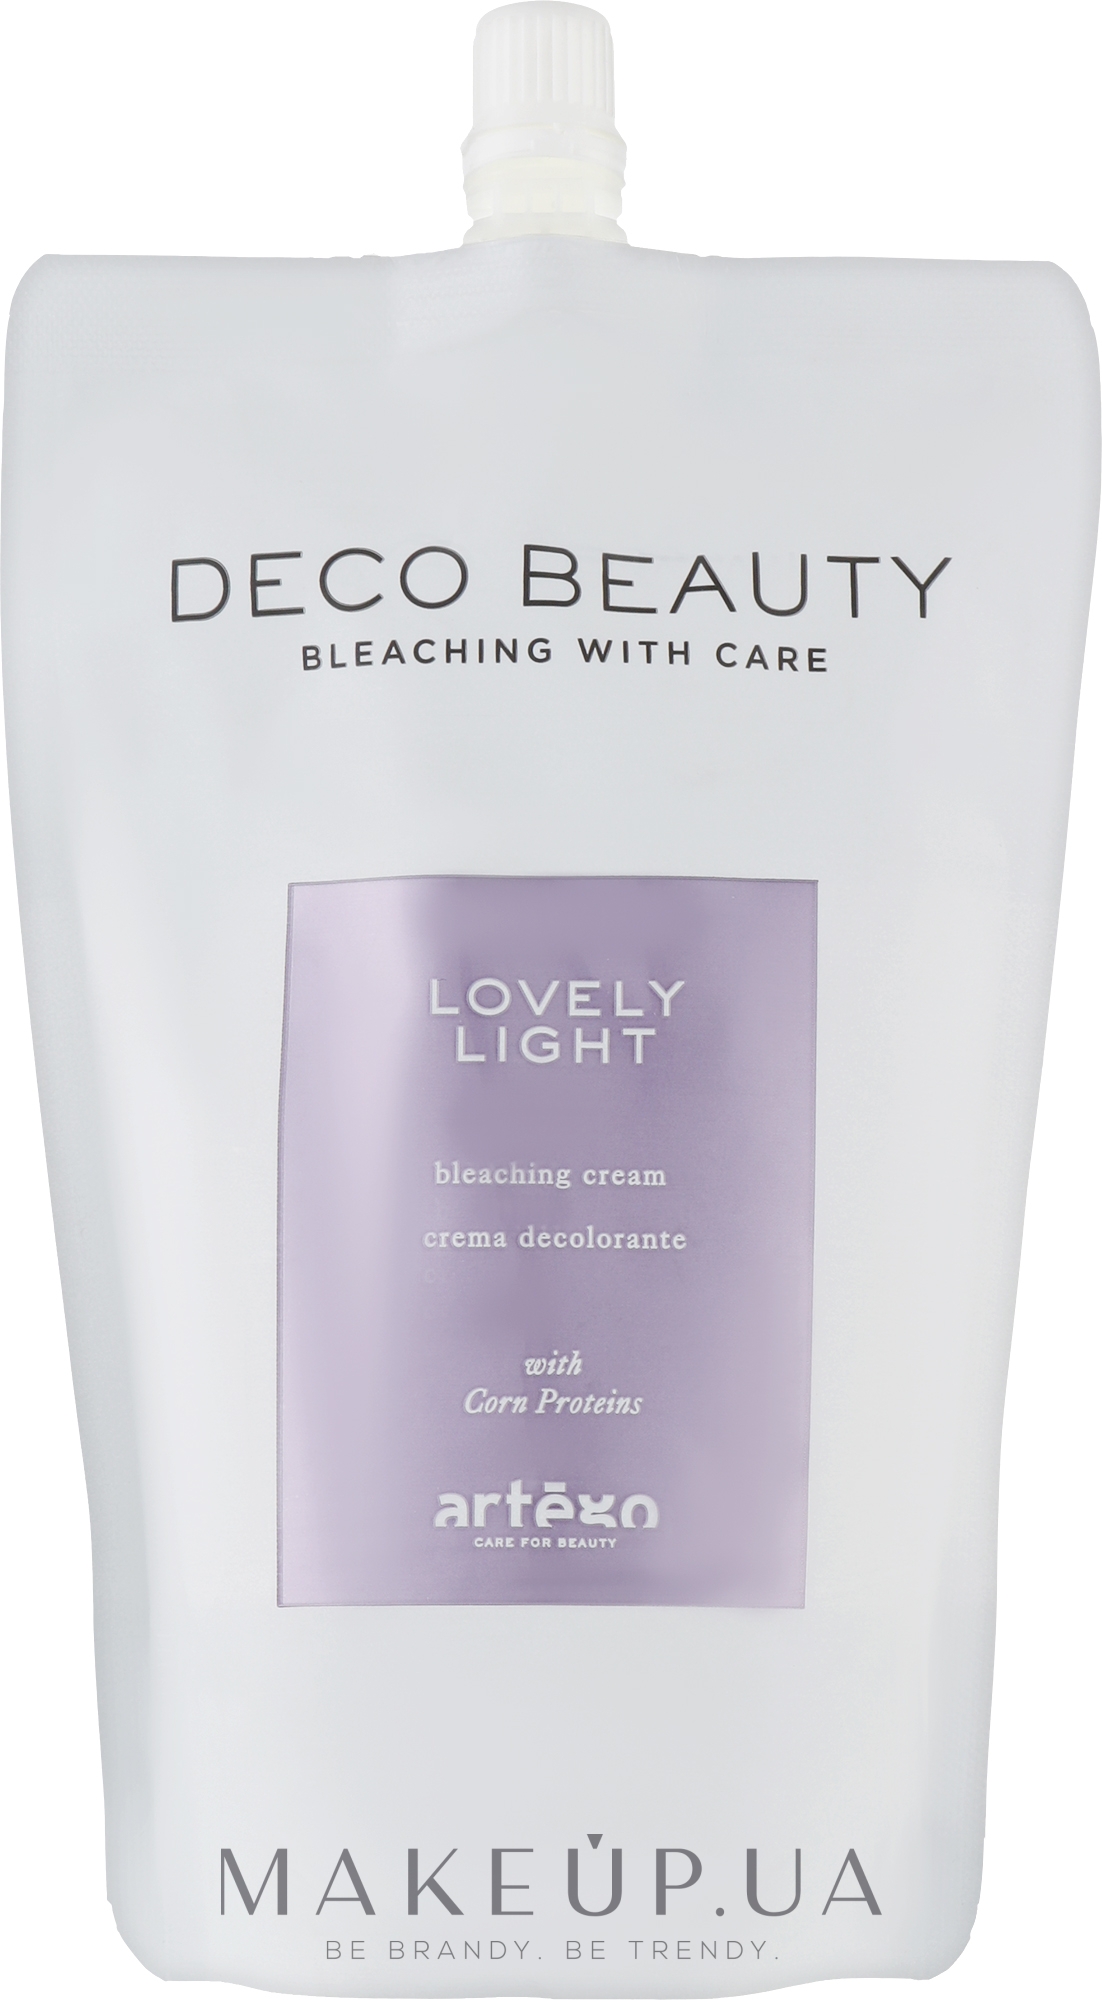 Освітлювальний крем для волосся - Artego Deco Beauty Lovely Light Bleaching Cream — фото 500g